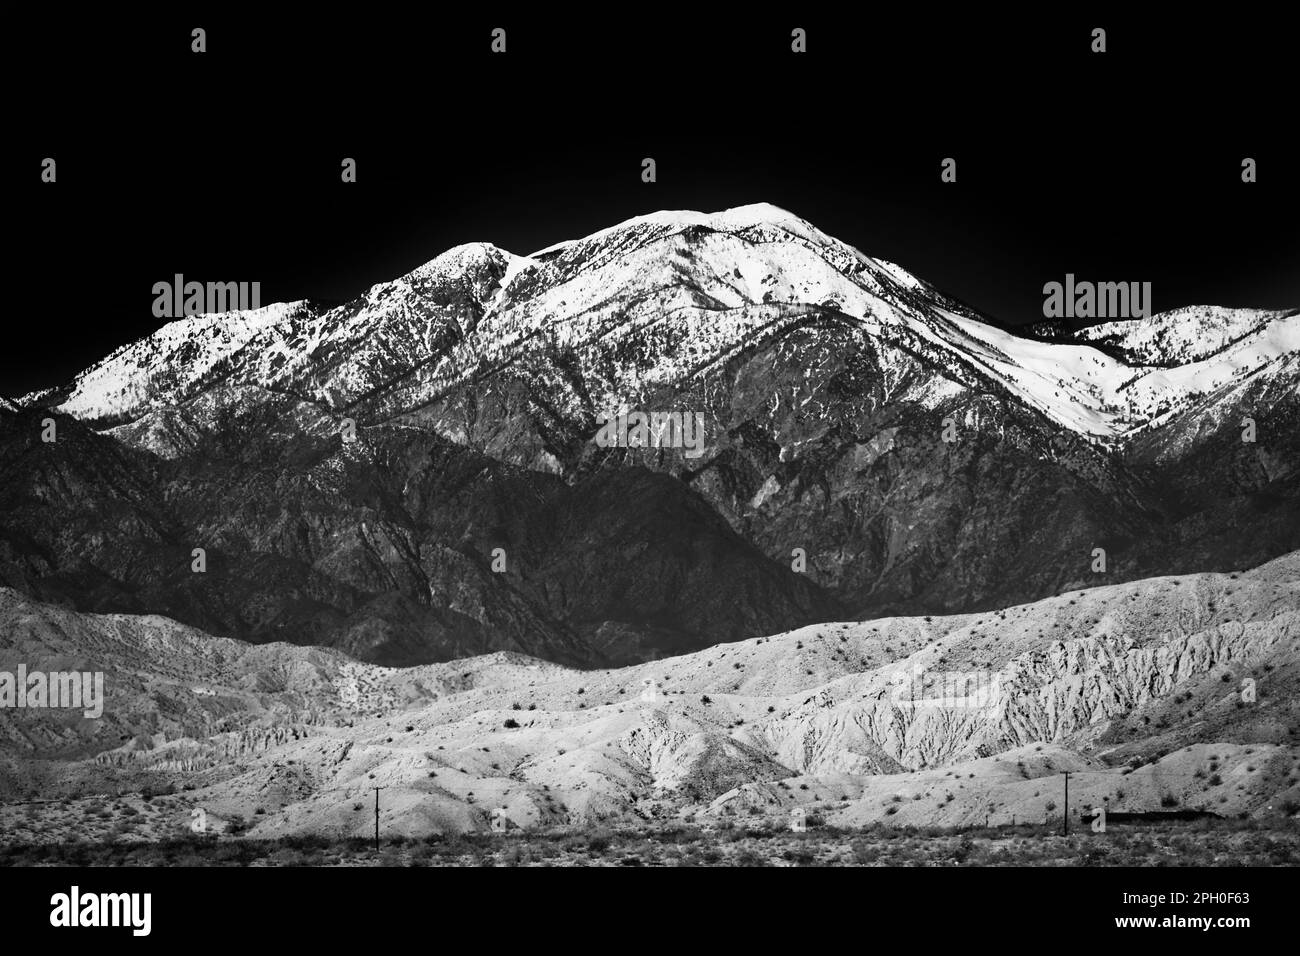 Black and White artistic photos of the Santa Rosa Mountains in California. Stock Photo